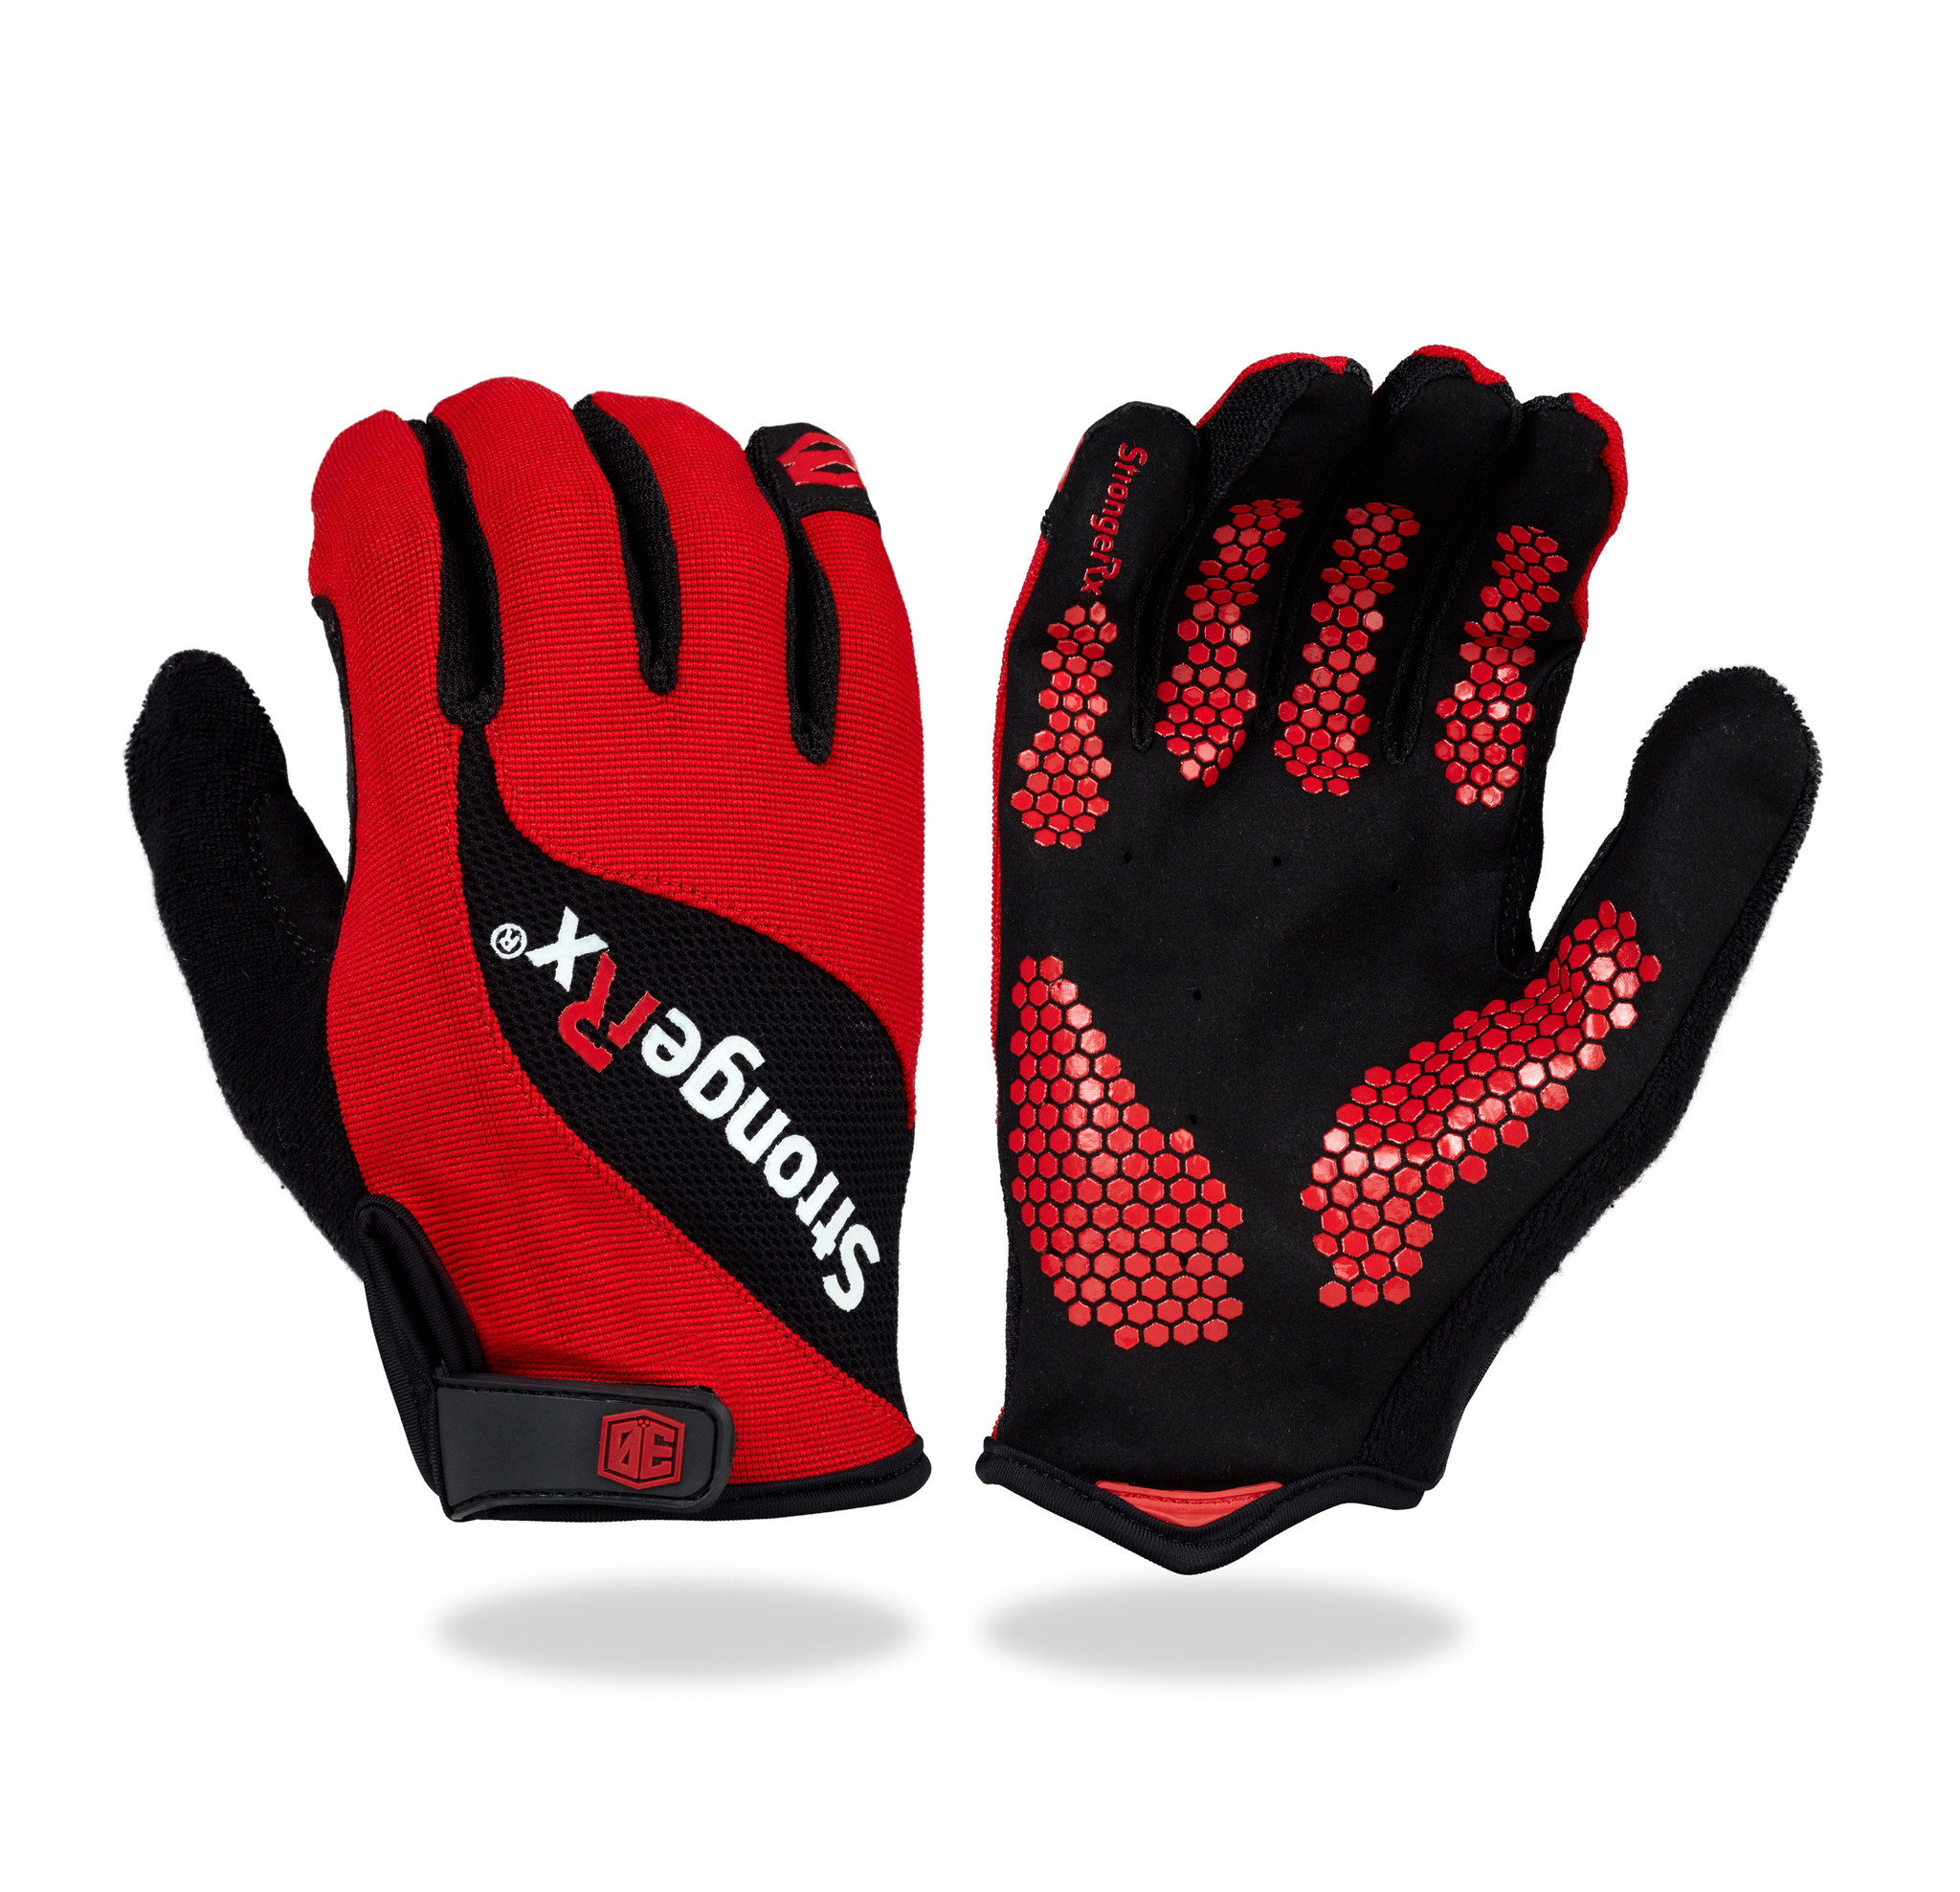 StrongerRx 3.0 Gloves for WODs Red Pair